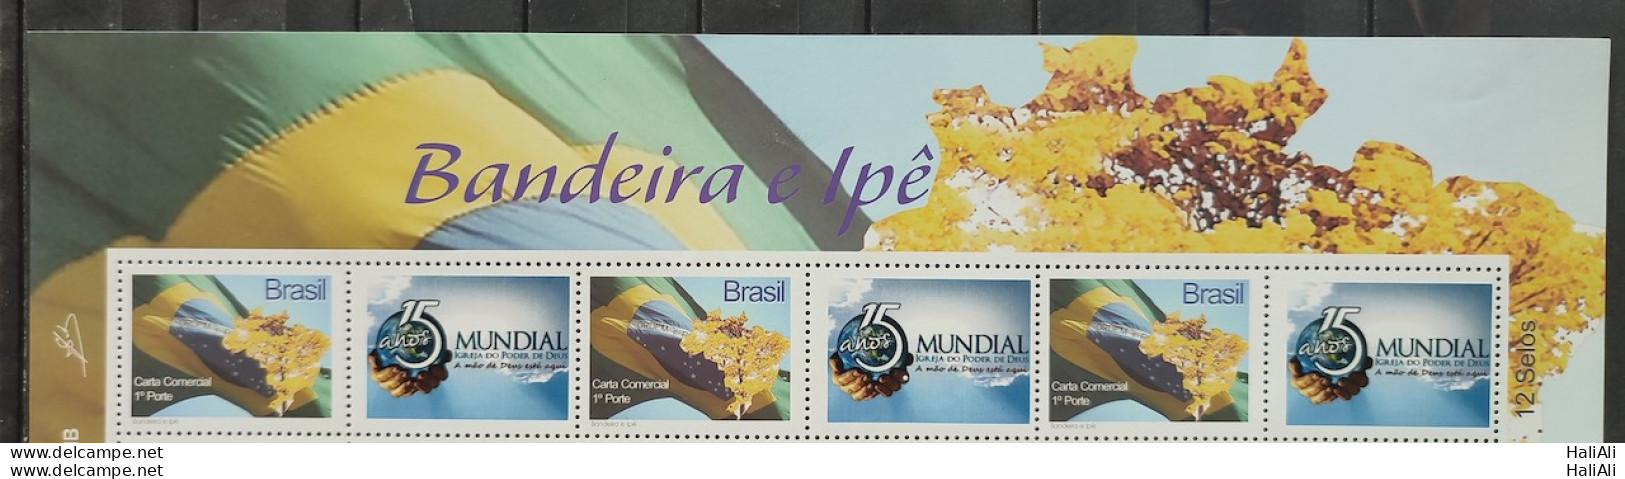 C 2853 Brazil Personalized Stamp Tourism Ipe Flag Church Religion 2009 Vignette 3 Units - Gepersonaliseerde Postzegels